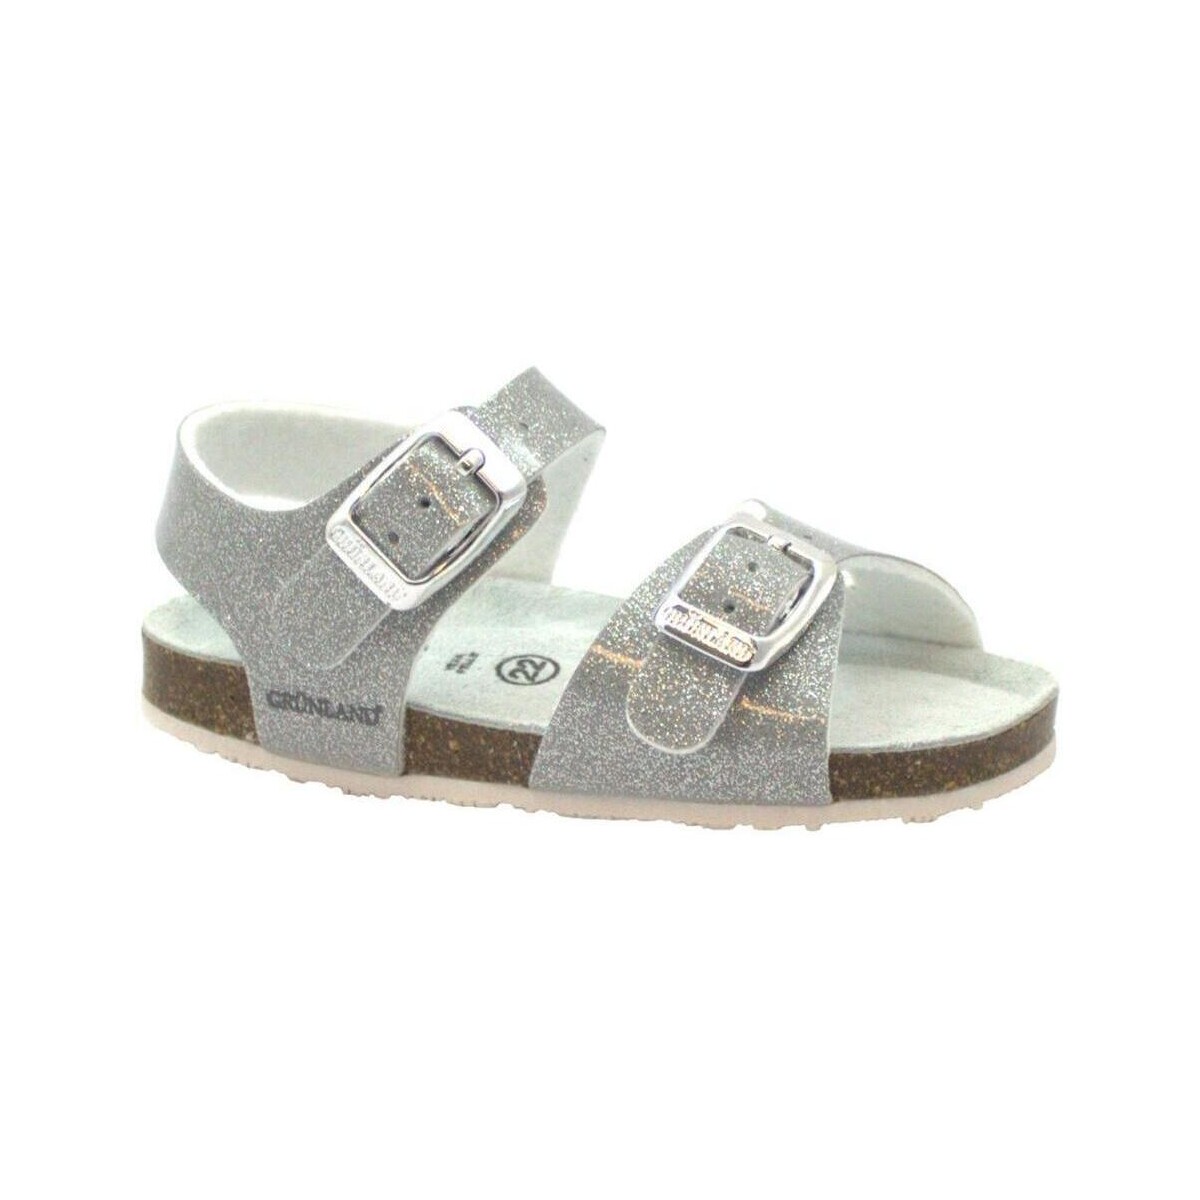 Schuhe Kinder Sandalen / Sandaletten Grunland GRU-CCC-SB1258-AR Silbern